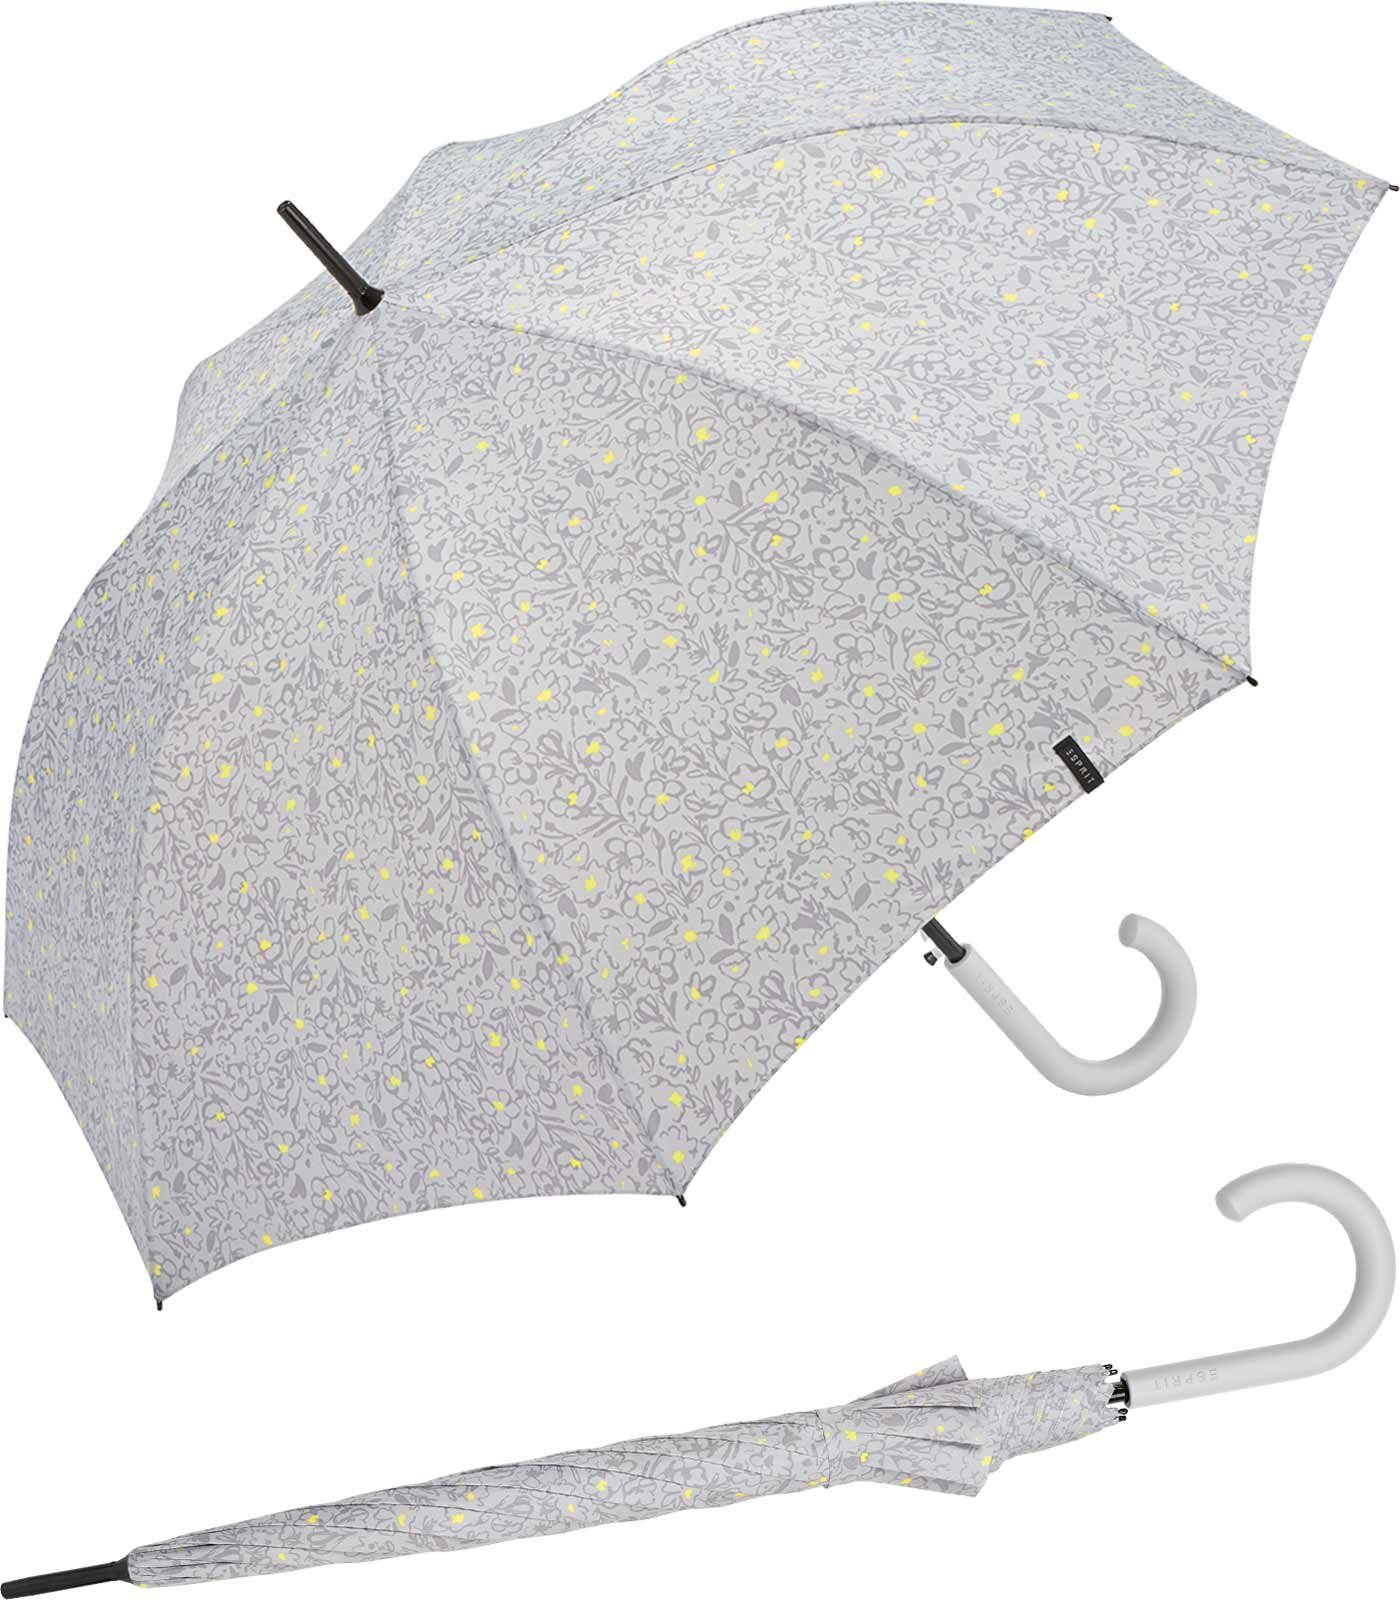 Esprit Langregenschirm Damen Regenschirm mit Automatik Scribbled Romance, mit romantischem Blüten-Muster grau